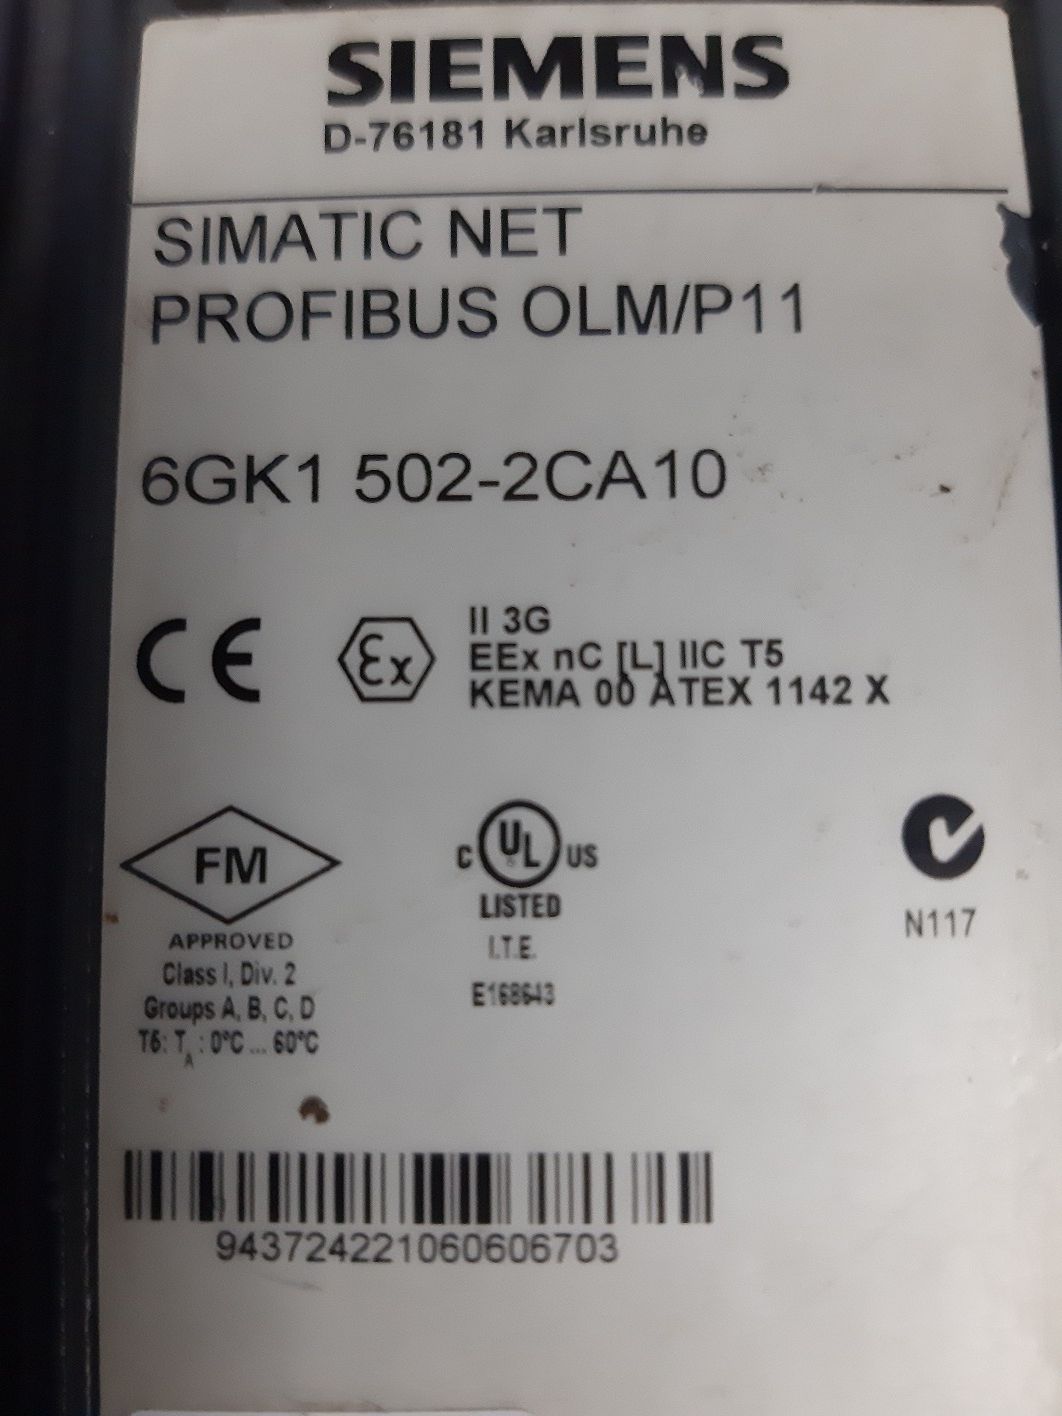 SIEMENS SIMATIC NET PB OLM/P11 6GK1 502-2CA10